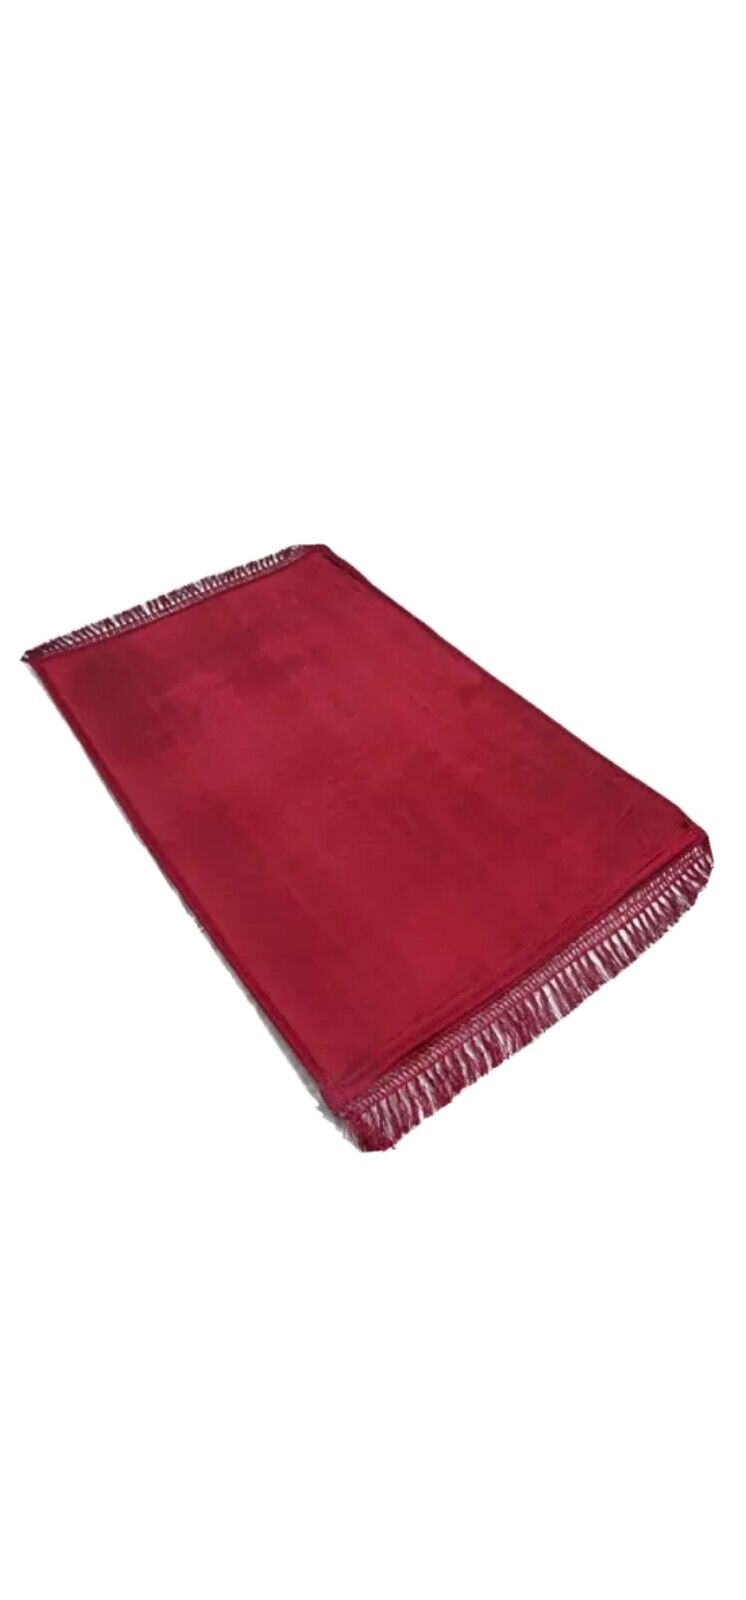 Big Islamic Plush Velvet Prayer Rug | Solid Simple One Color Dark Red & Silver